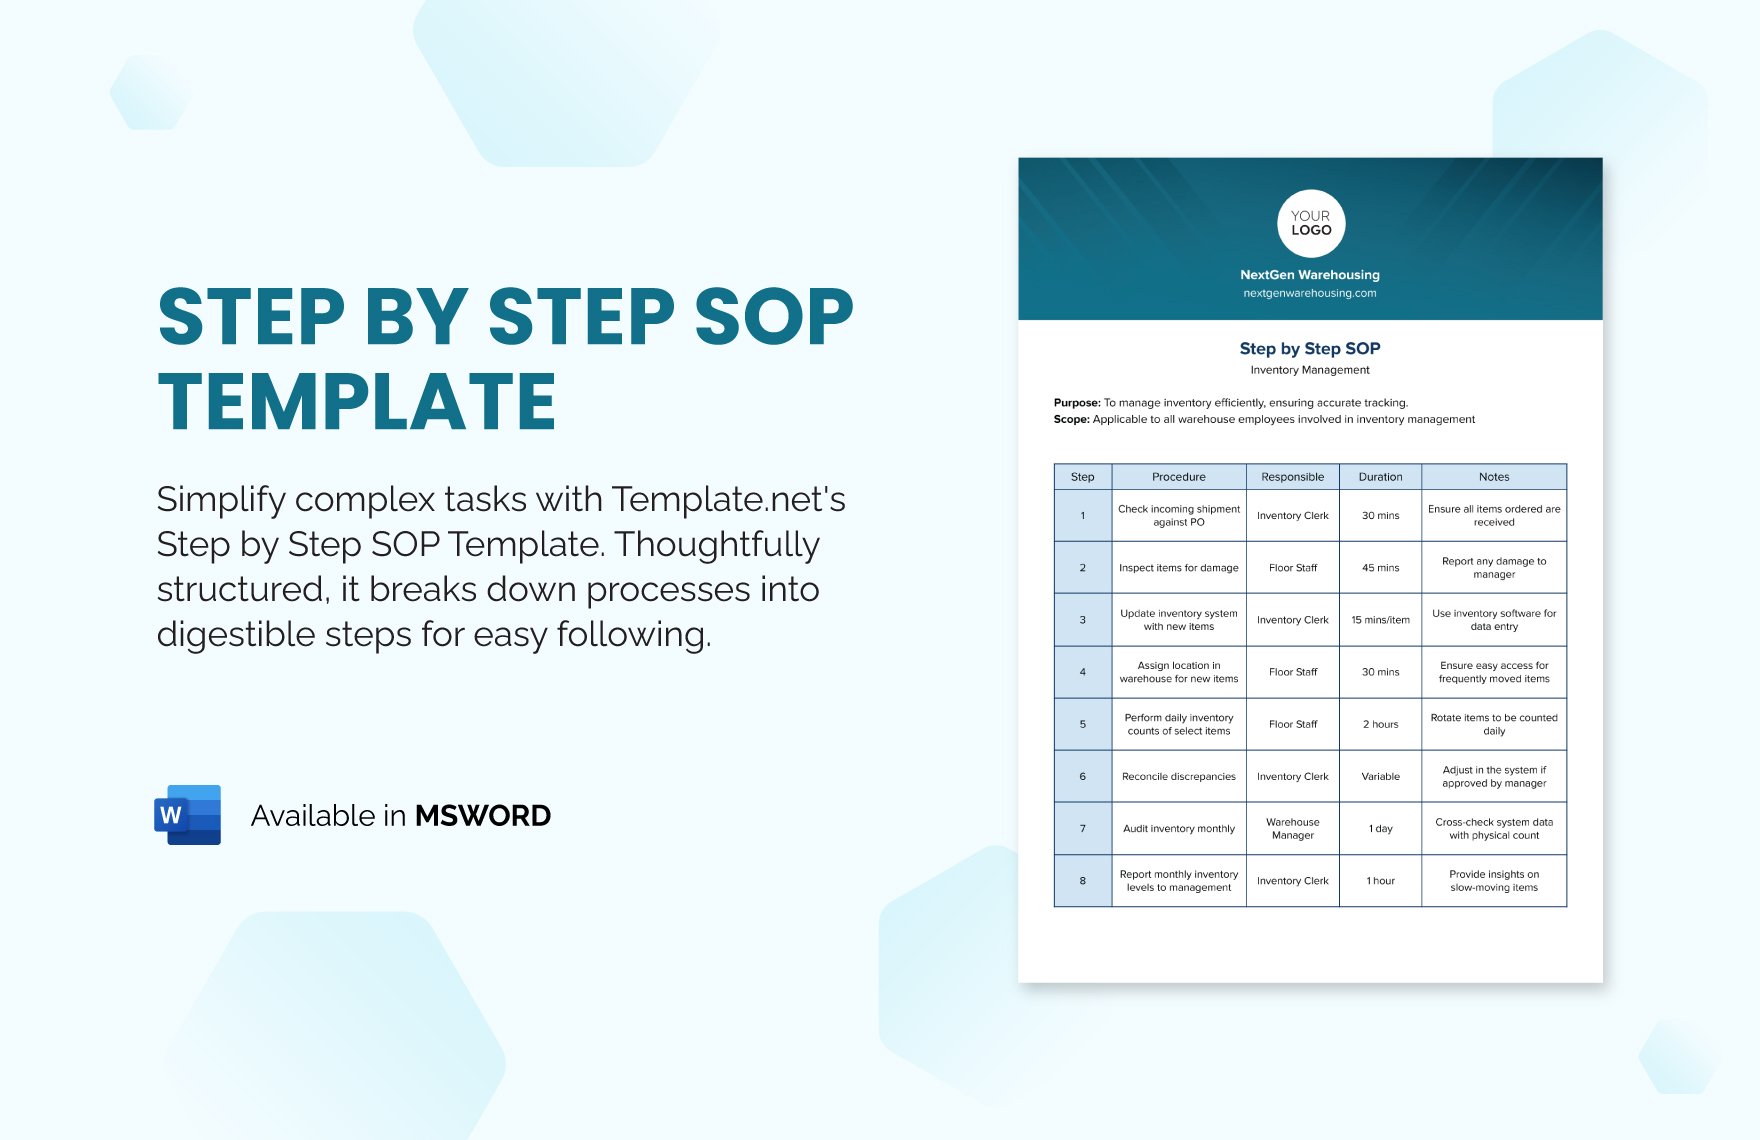 Step by Step SOP Template